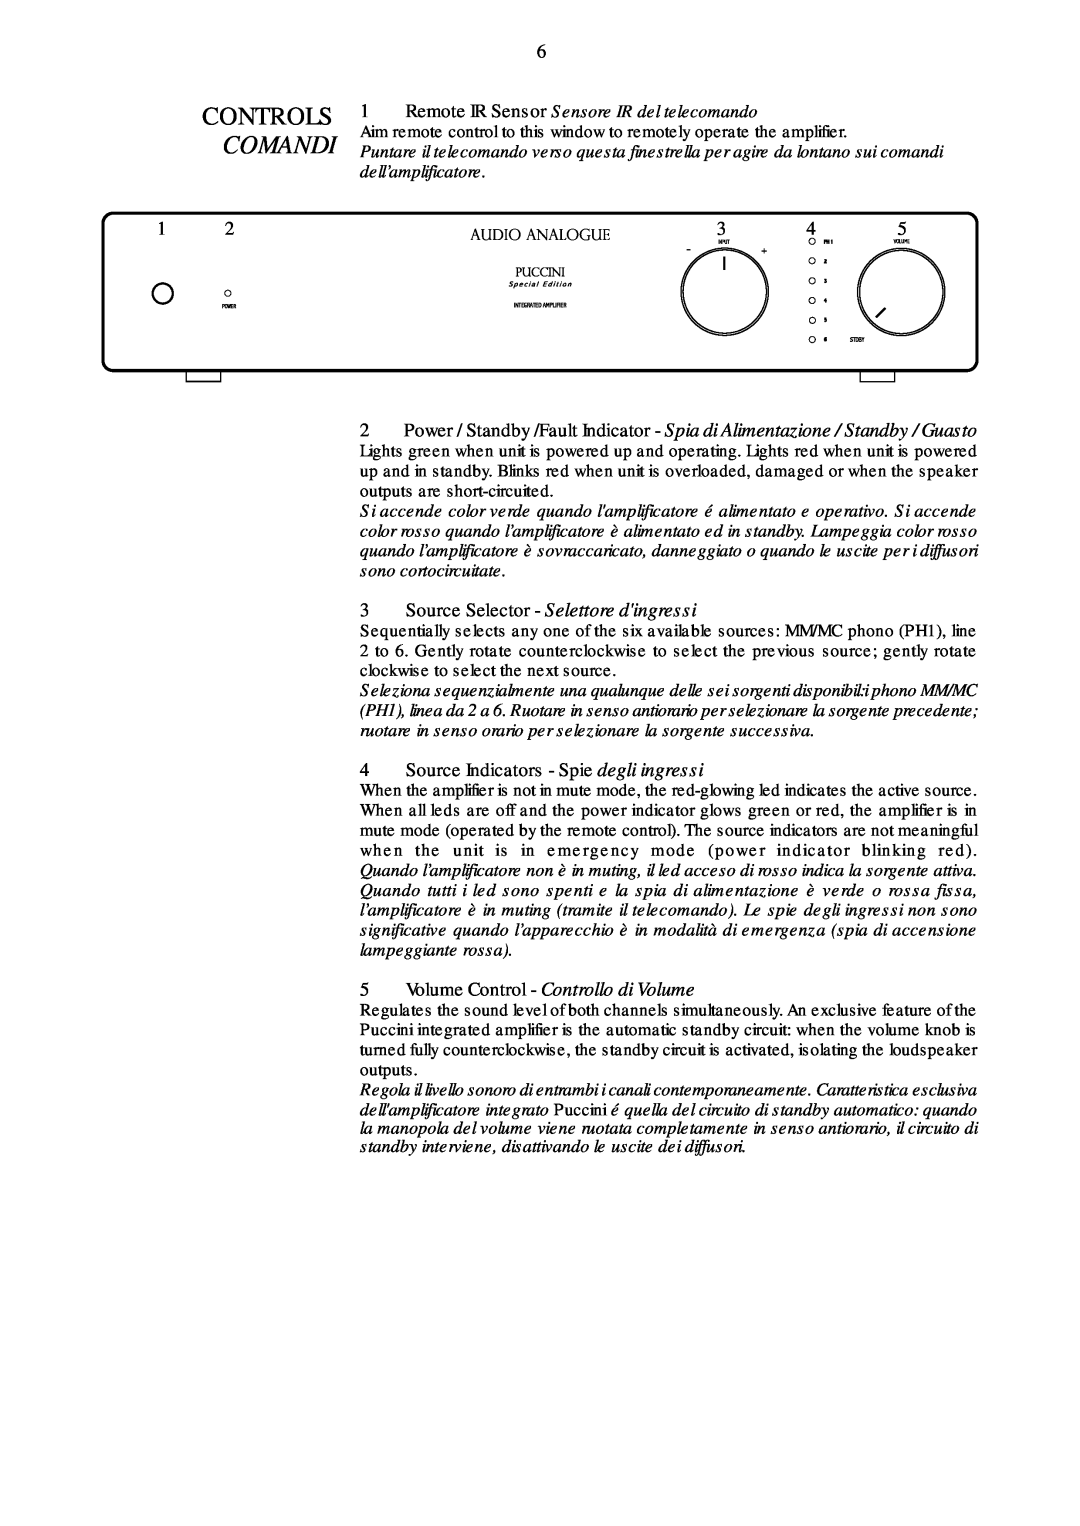 Audio Analogue SRL Audio Analogue SRL owner manual Controls Comandi, Source Indicators - Spie degli ingressi 